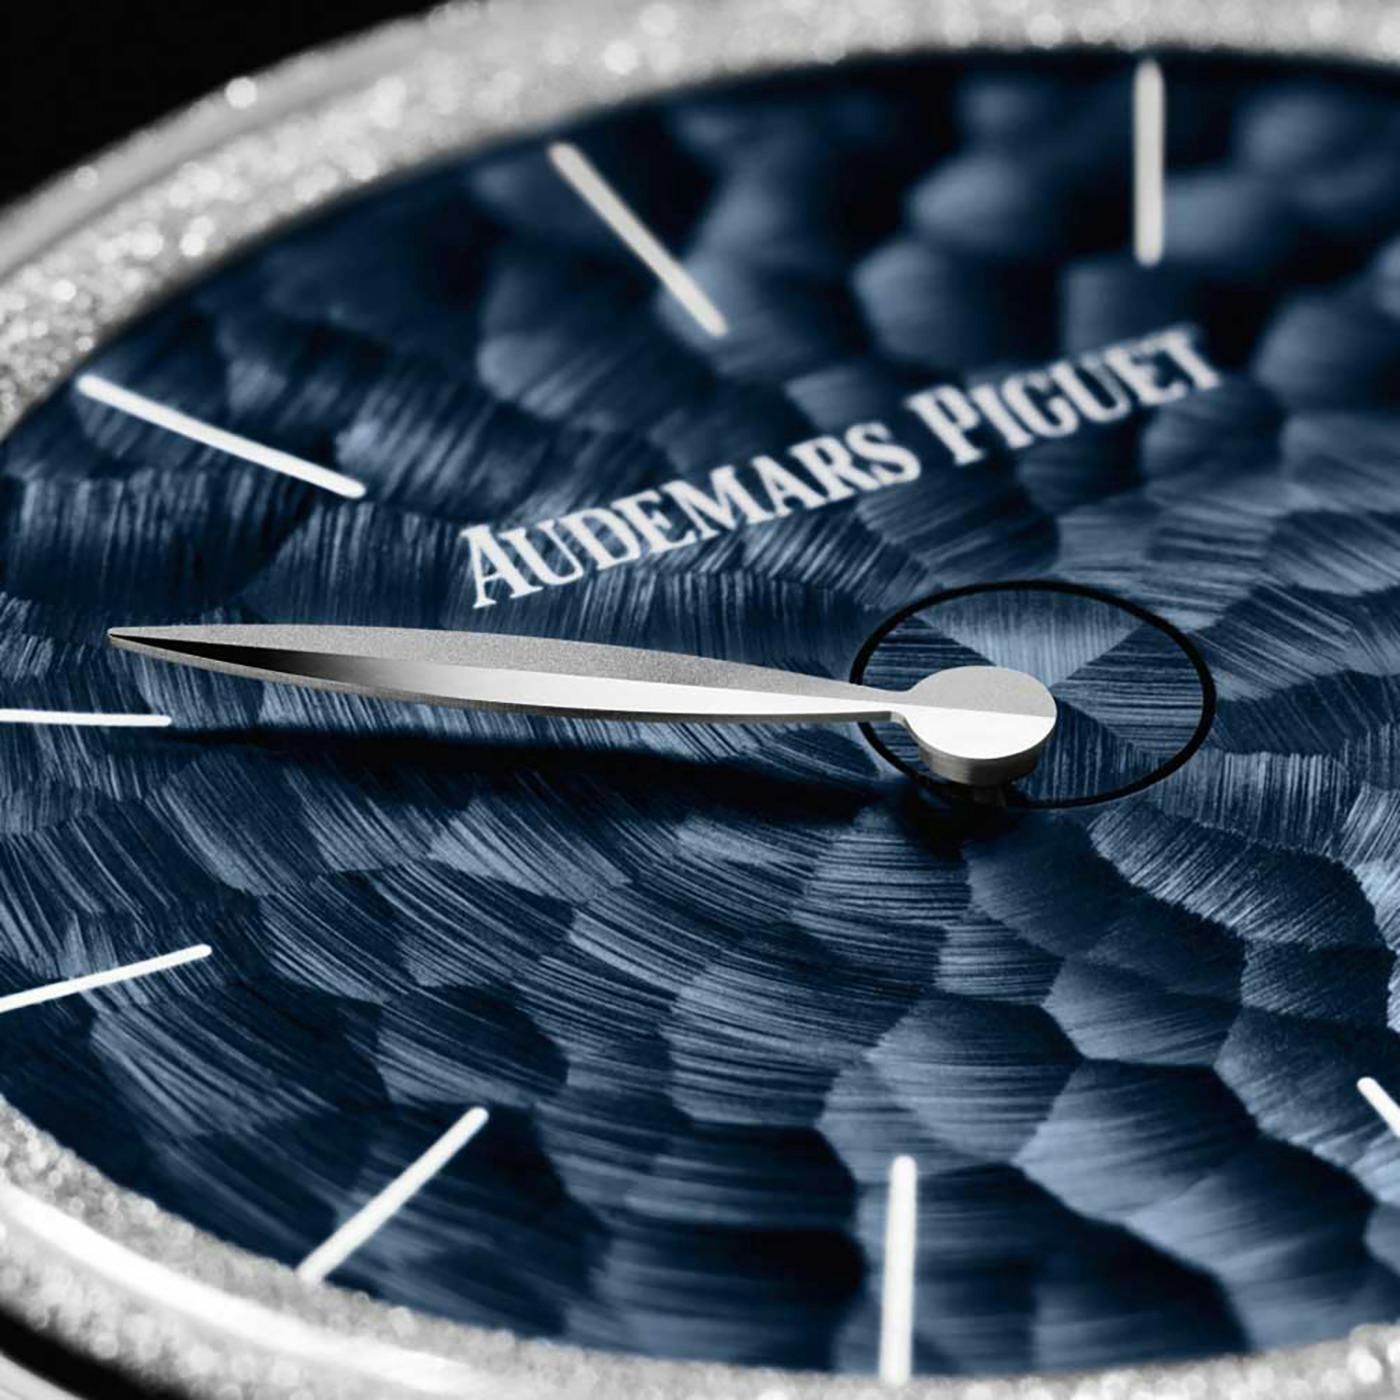 Audemars Piguet Men's Royal Oak Watch in Diamond, Rose Gold, Automatic | Govberg 15413OR.YY.1220OR.01